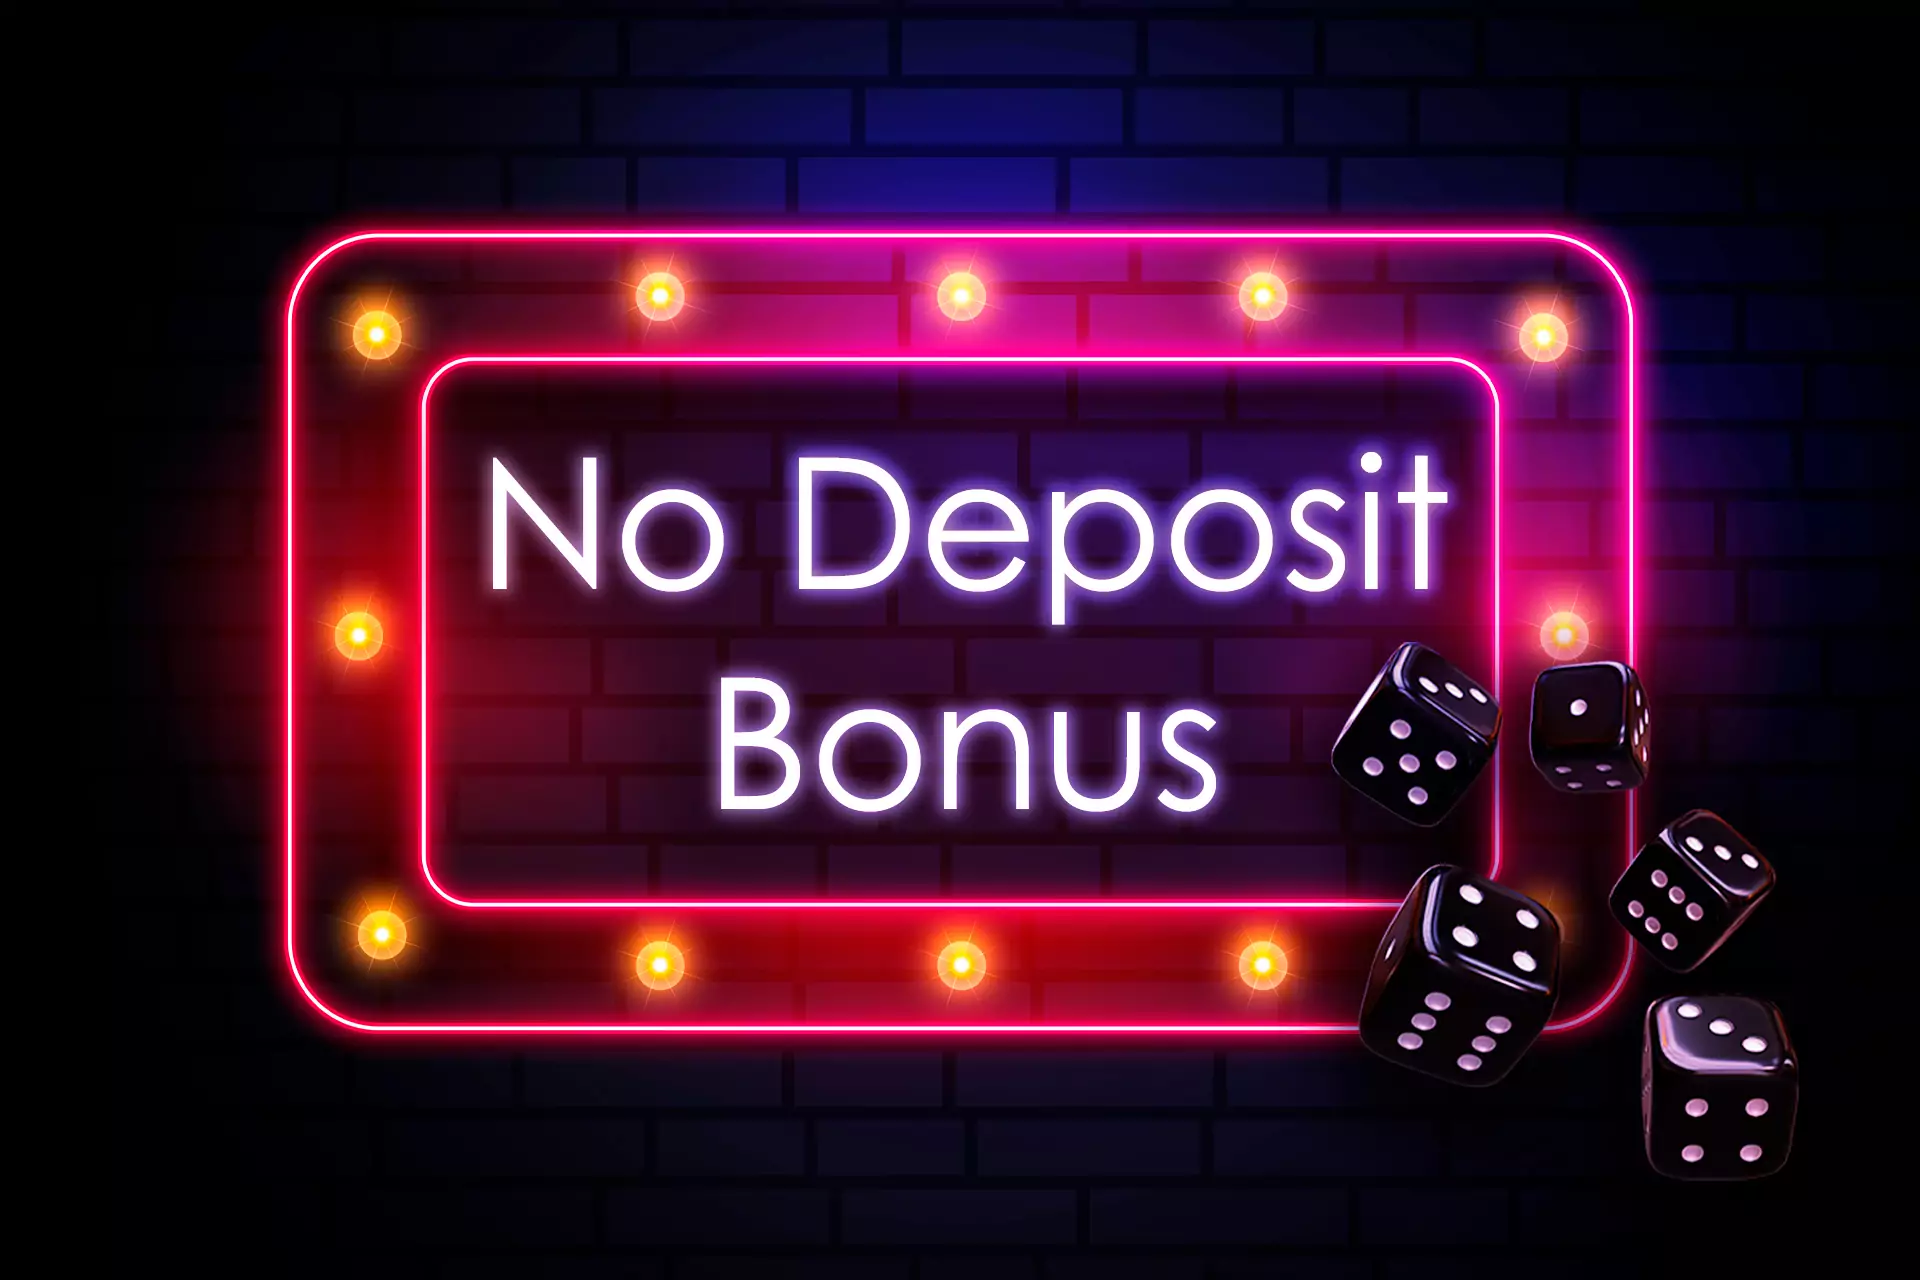 No deposit is a rare but less-risky type of casino bonus.